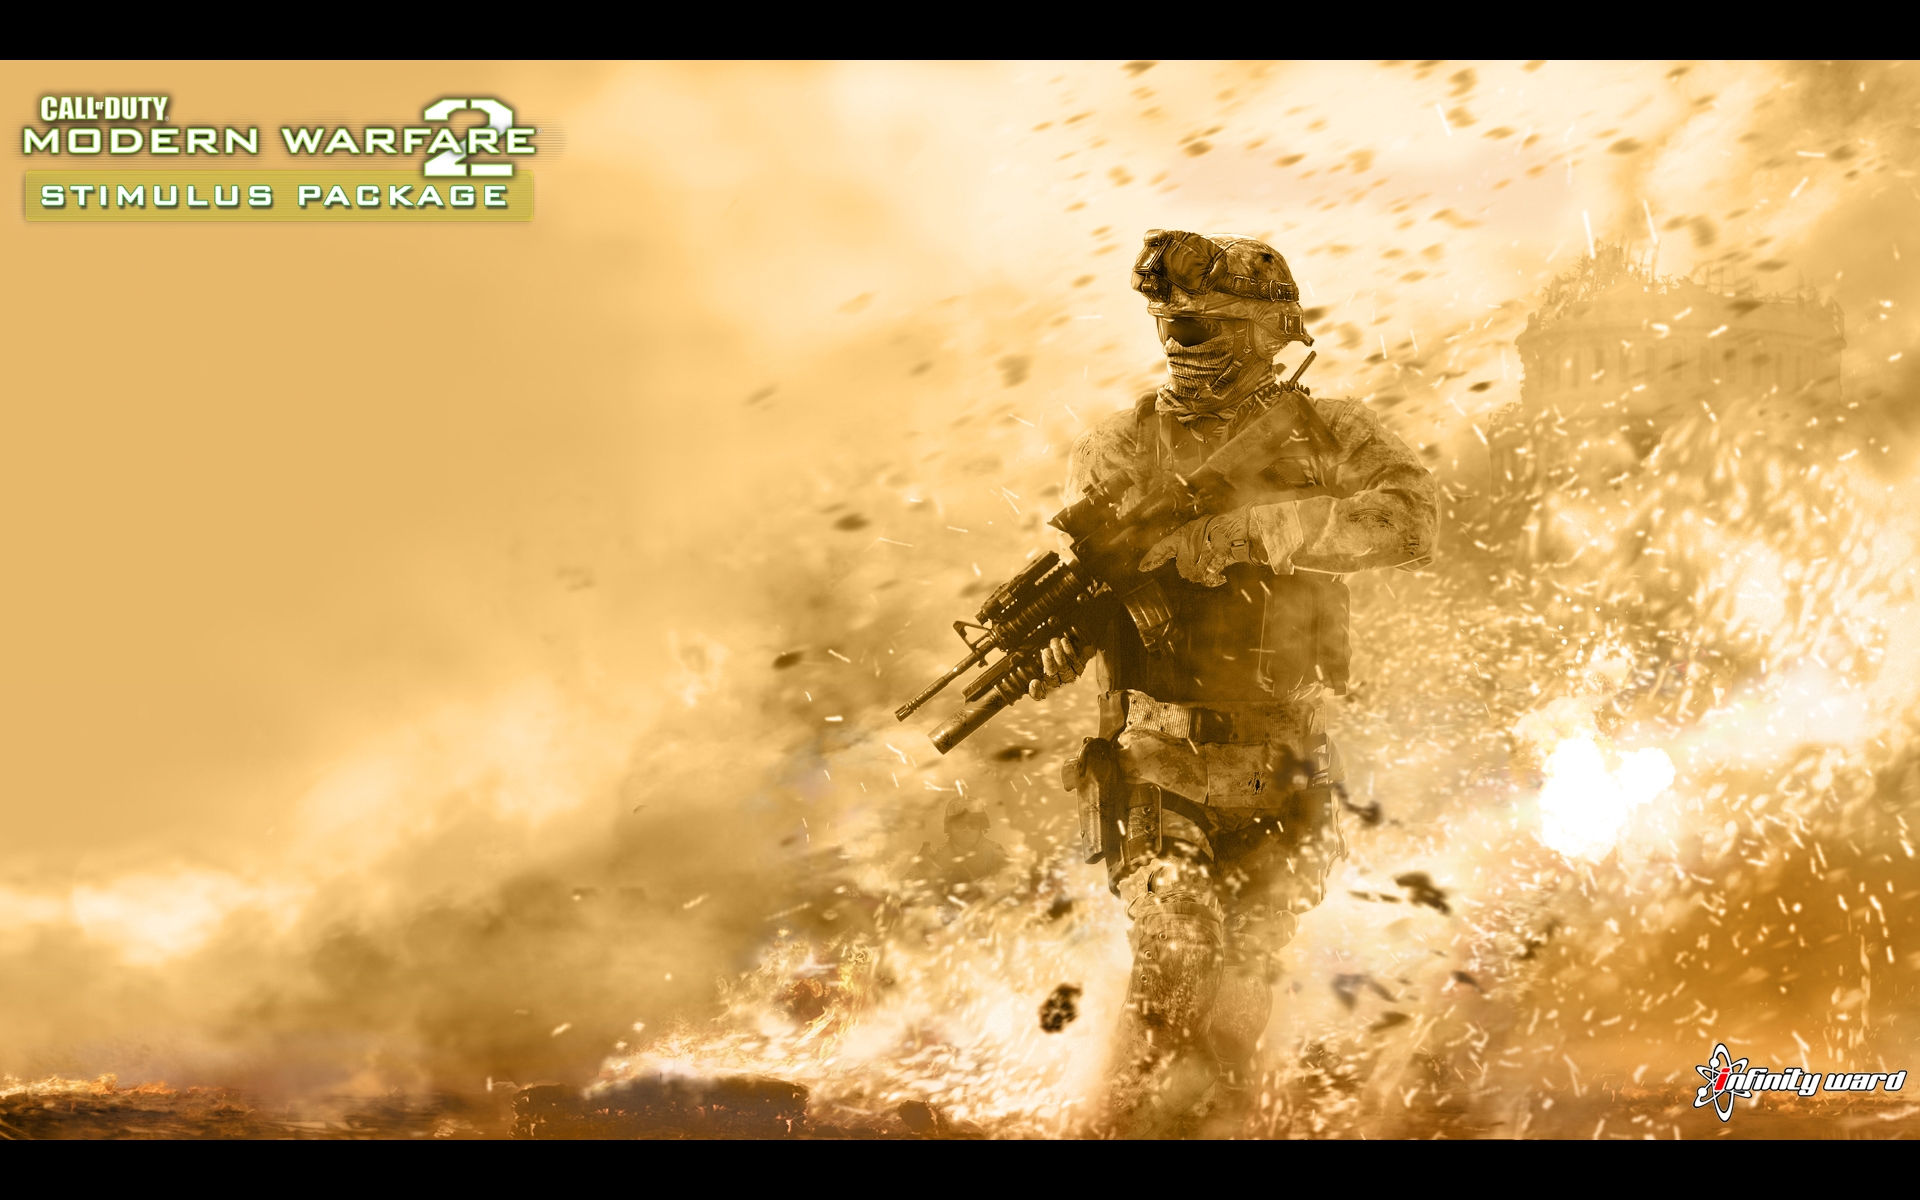 Wallpaper From Call Of Duty Modern Warfare